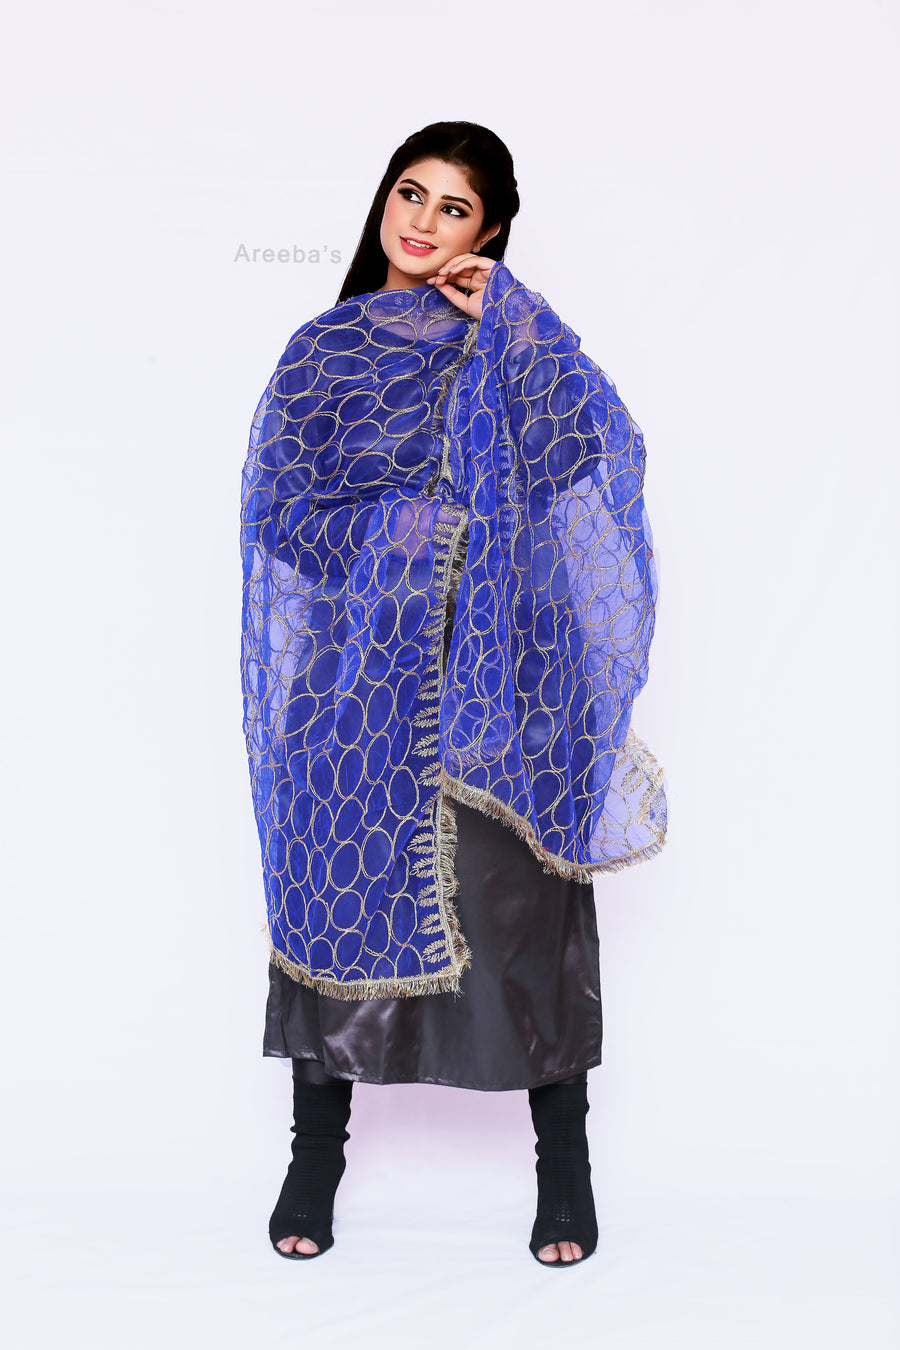 Blue Lotus Net- Areeba's Couture